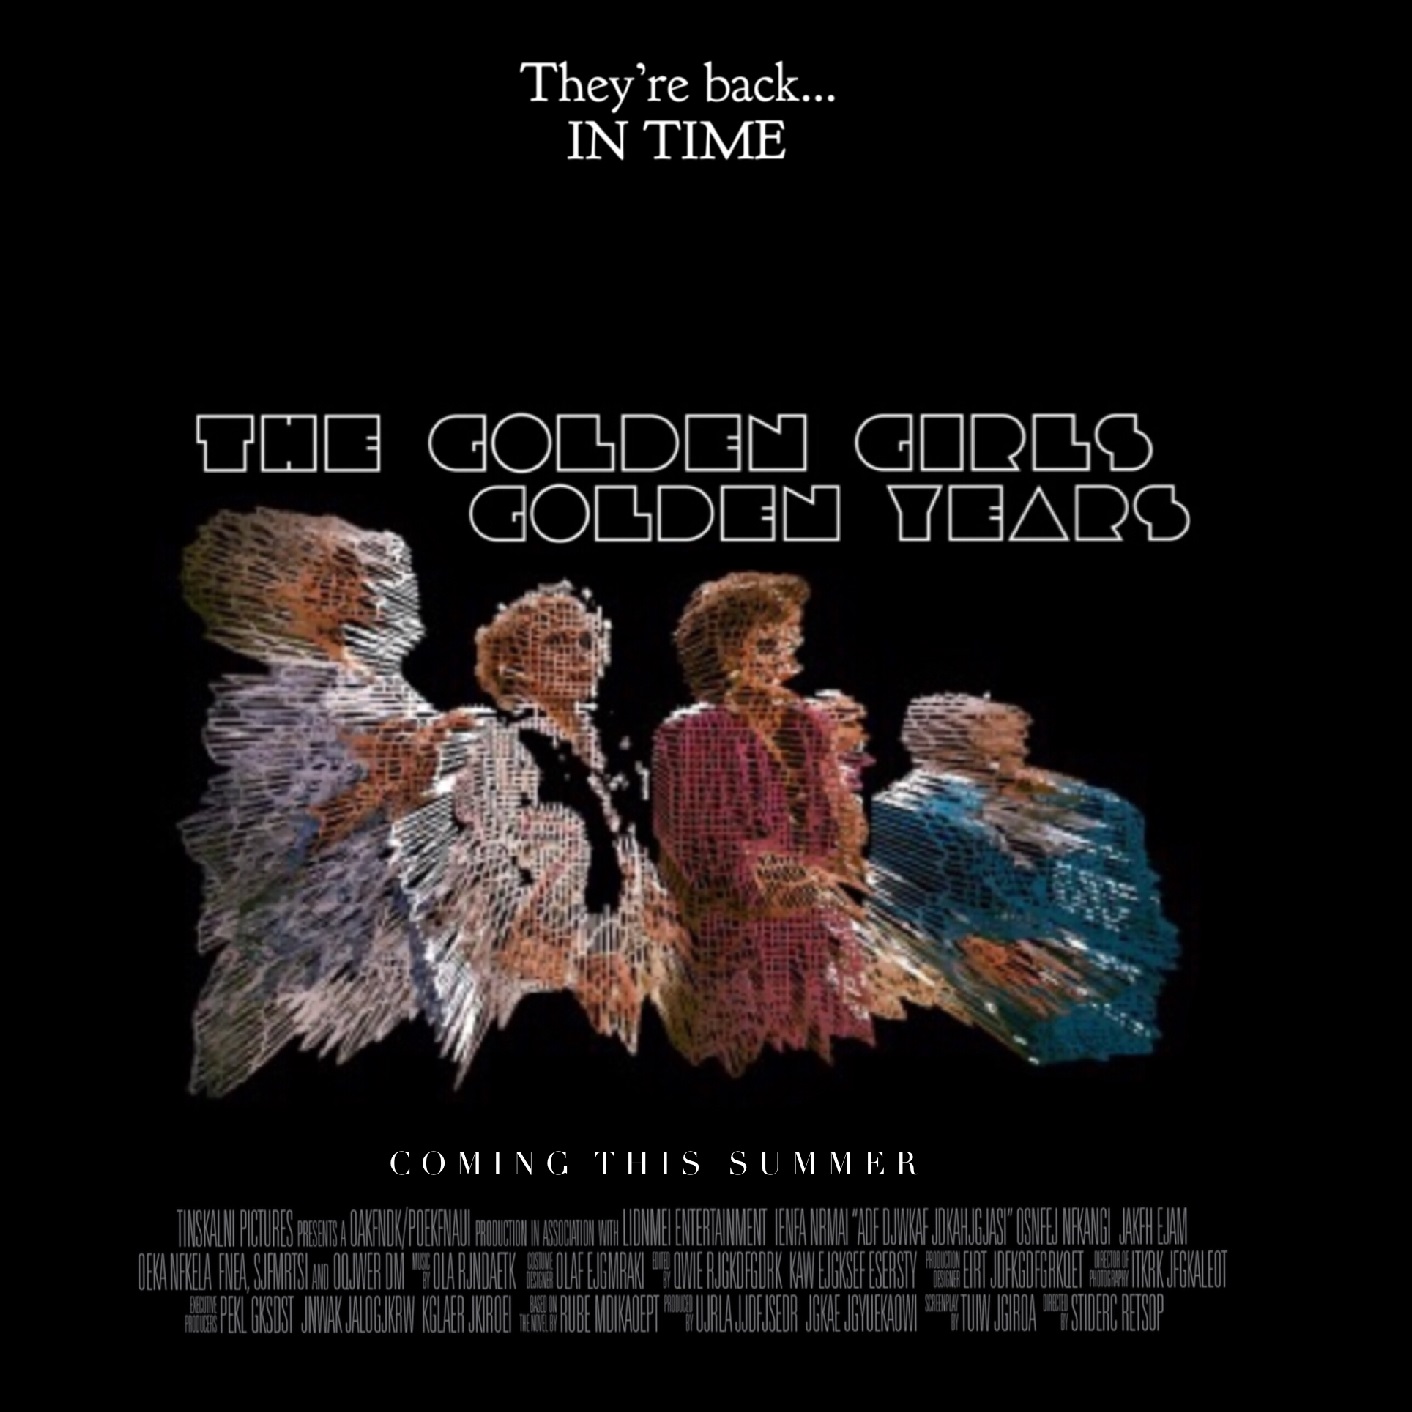 Episode 82 - The Golden Girls: Golden Years